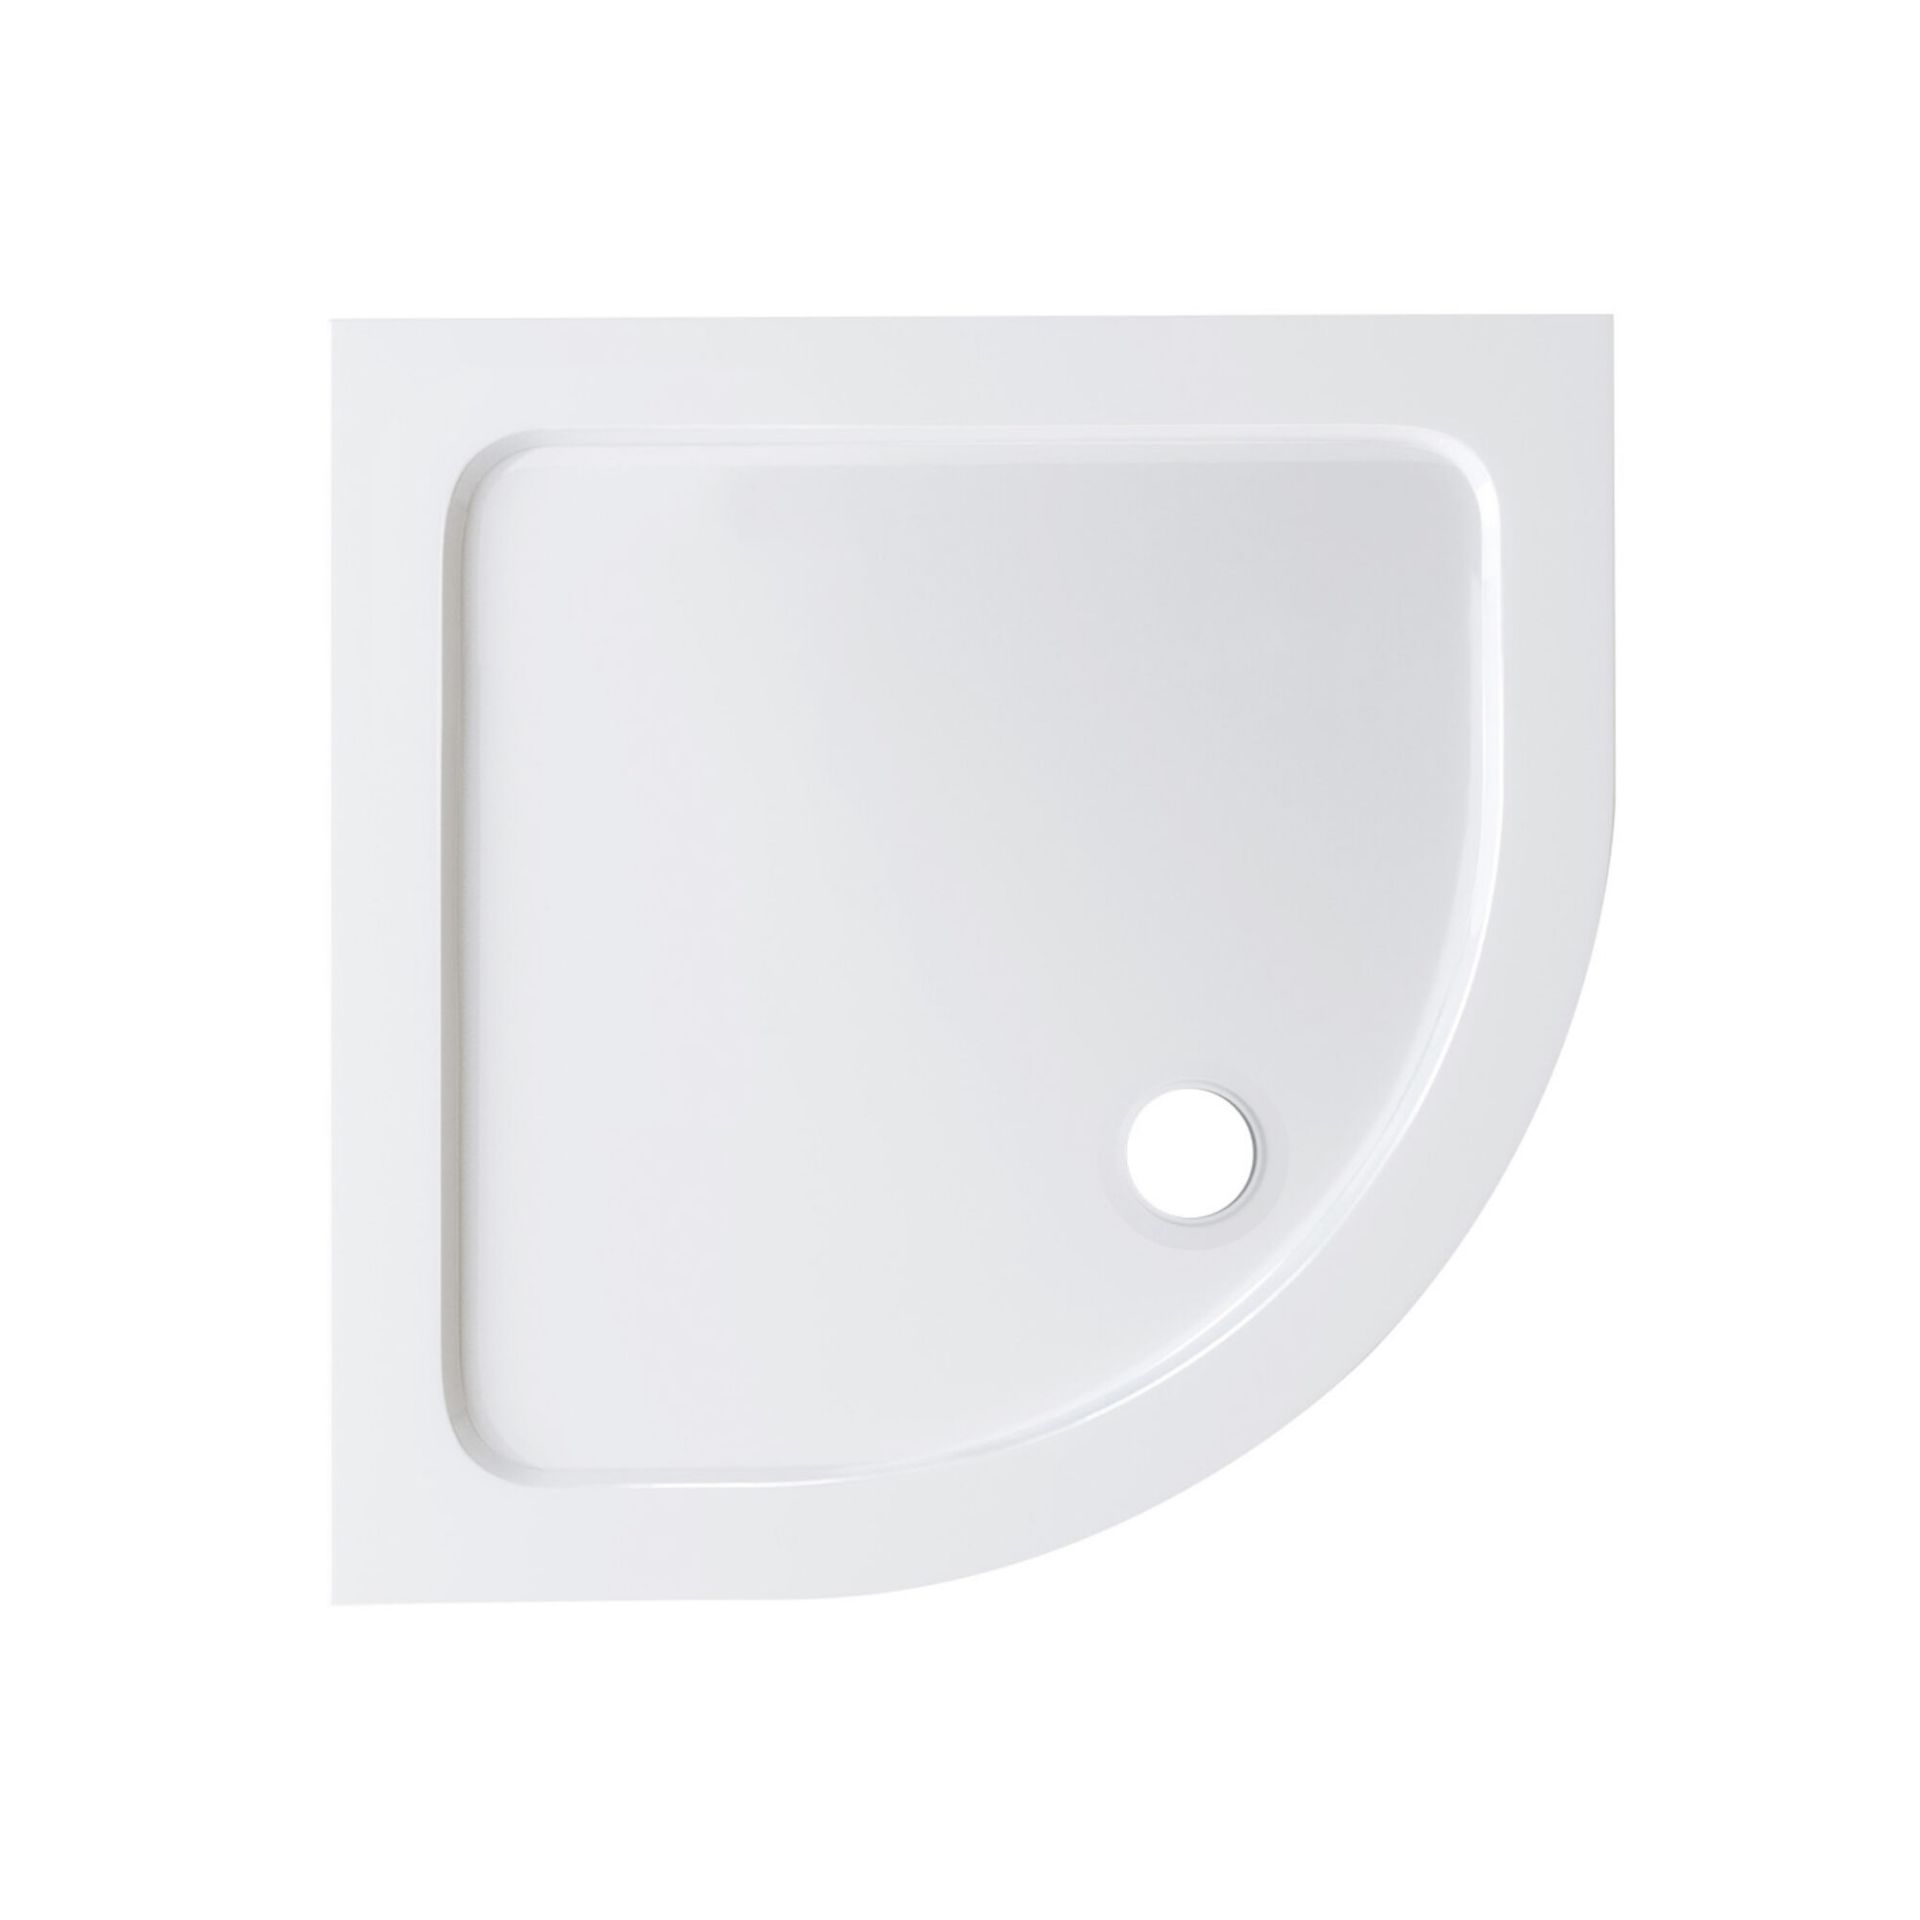 (MQ98) 900x900mm Quadrant Ultra Slim Stone Shower Tray. Low profile ultra slim design Gel coa...